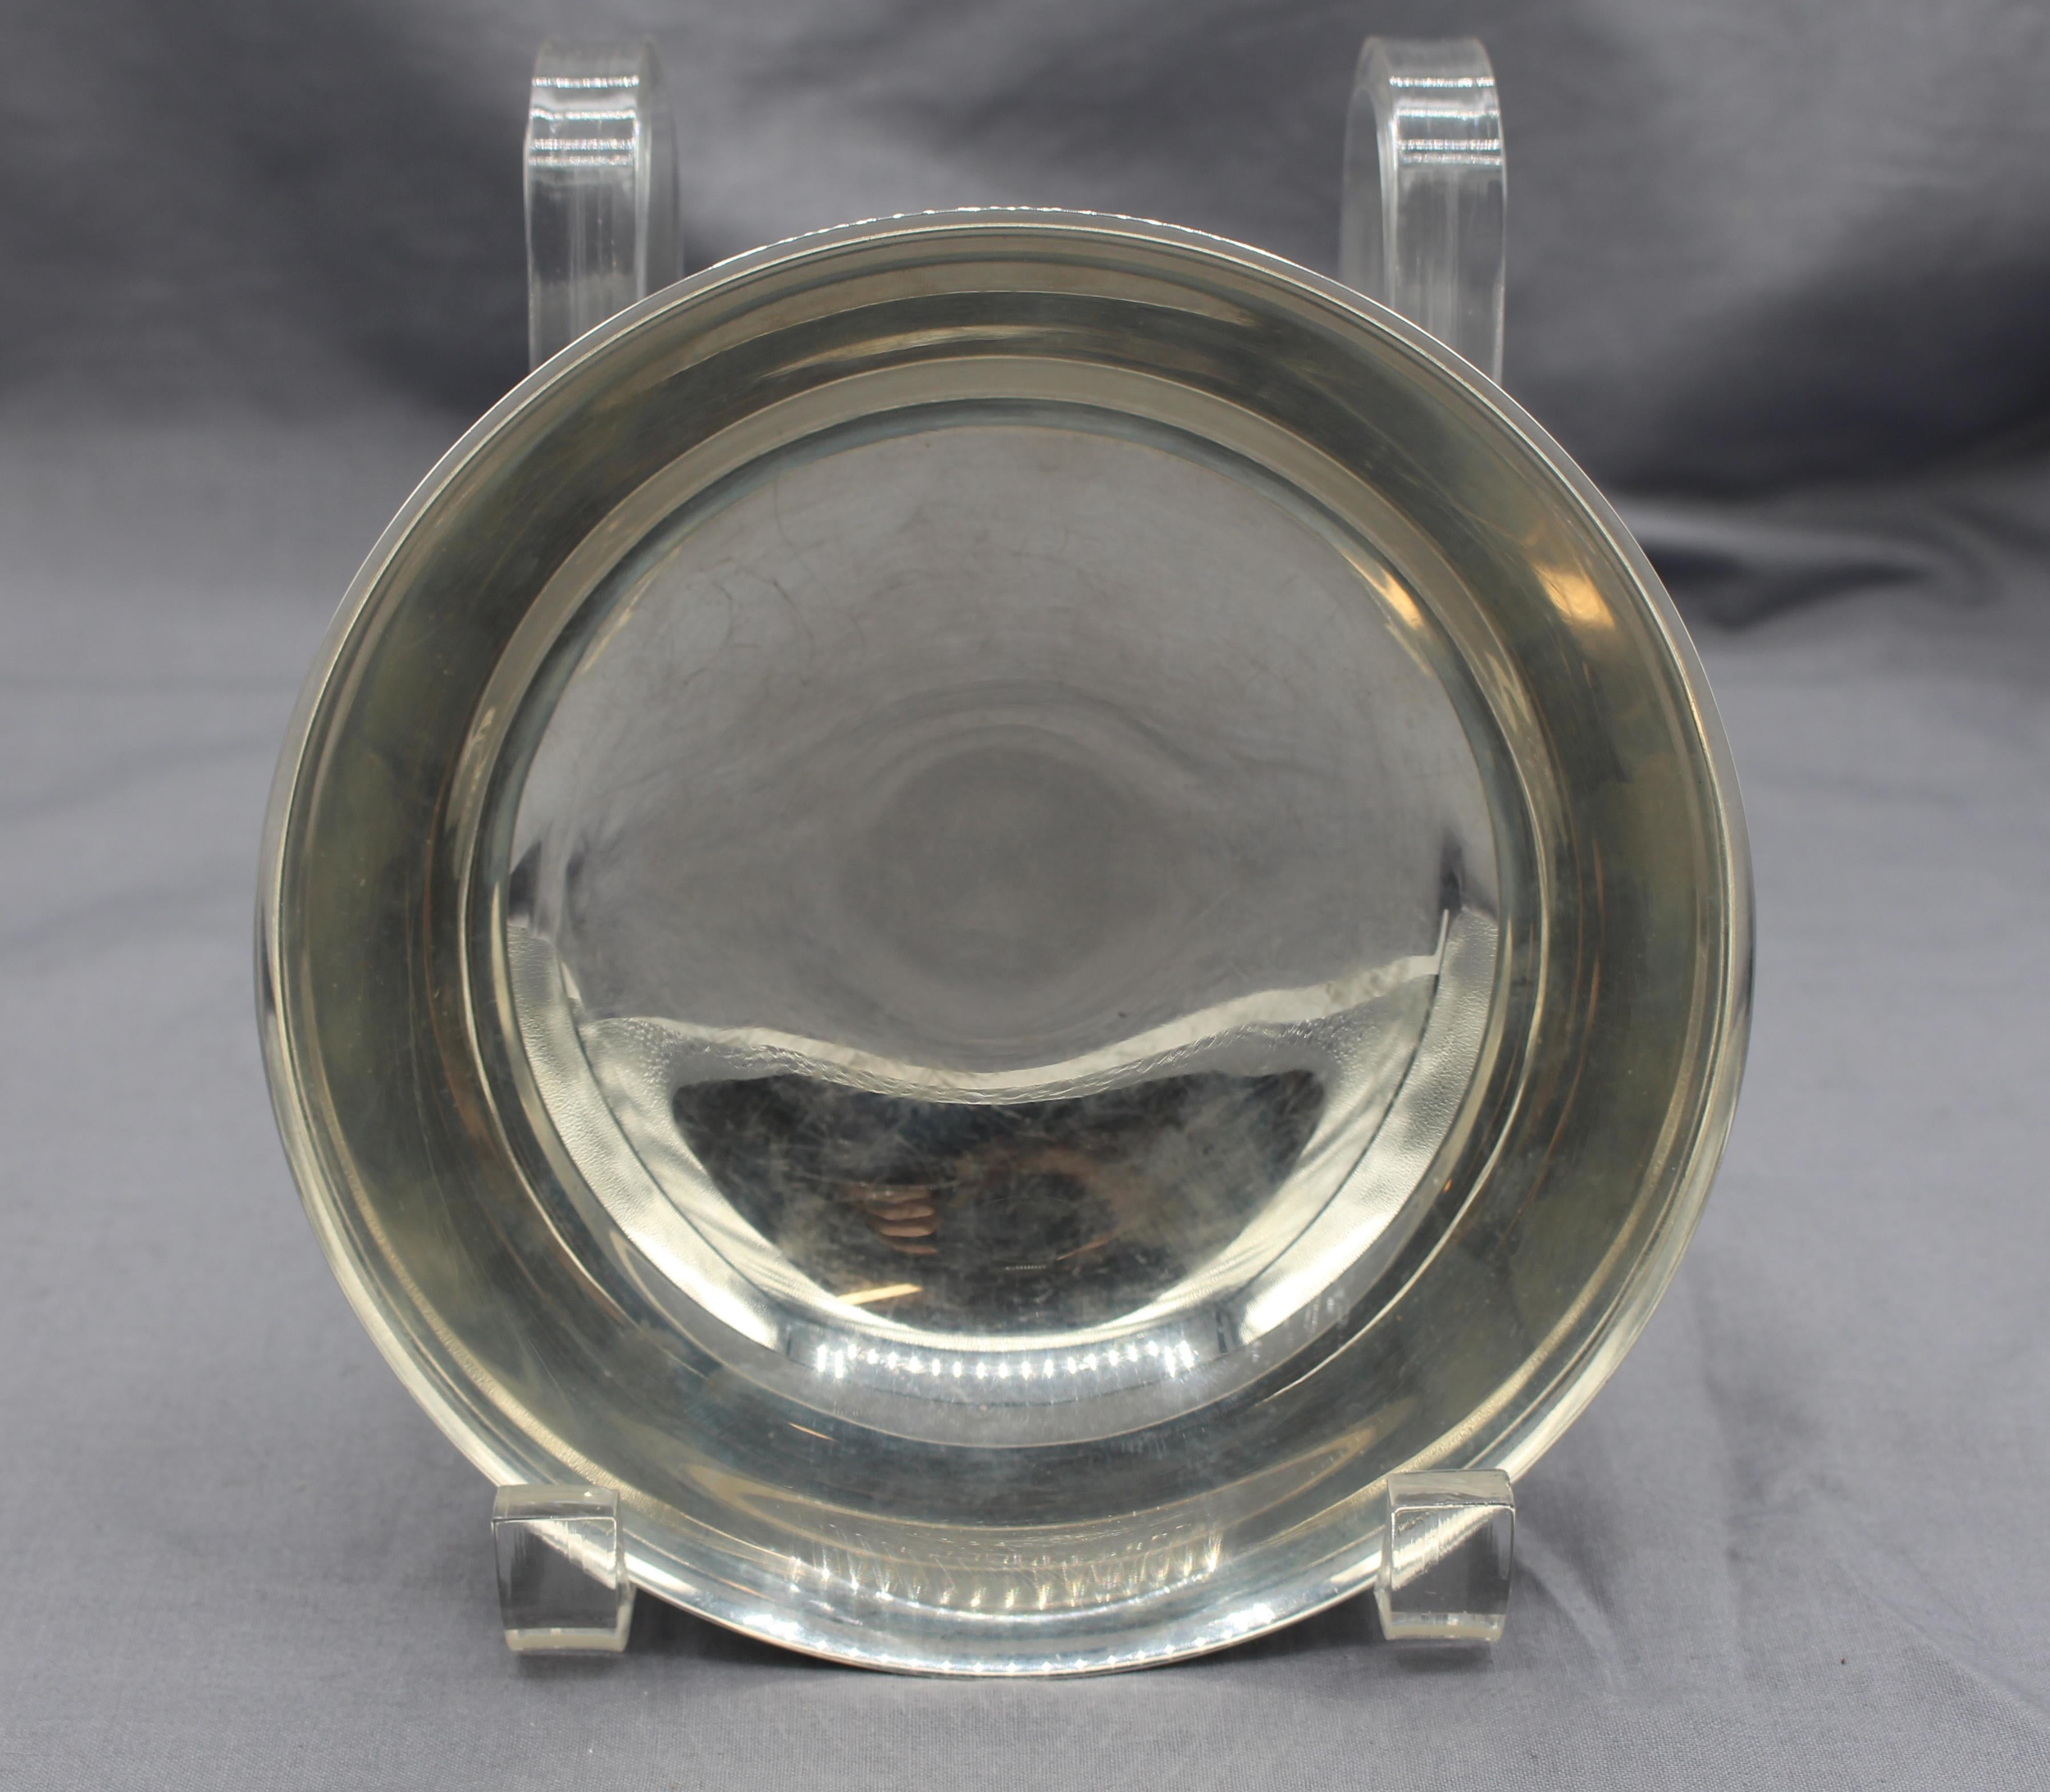 Gorham sterling bowl or candy dish. Stylish modernism form, round full plinth base foot. 8.15 troy oz.
Measures: 6